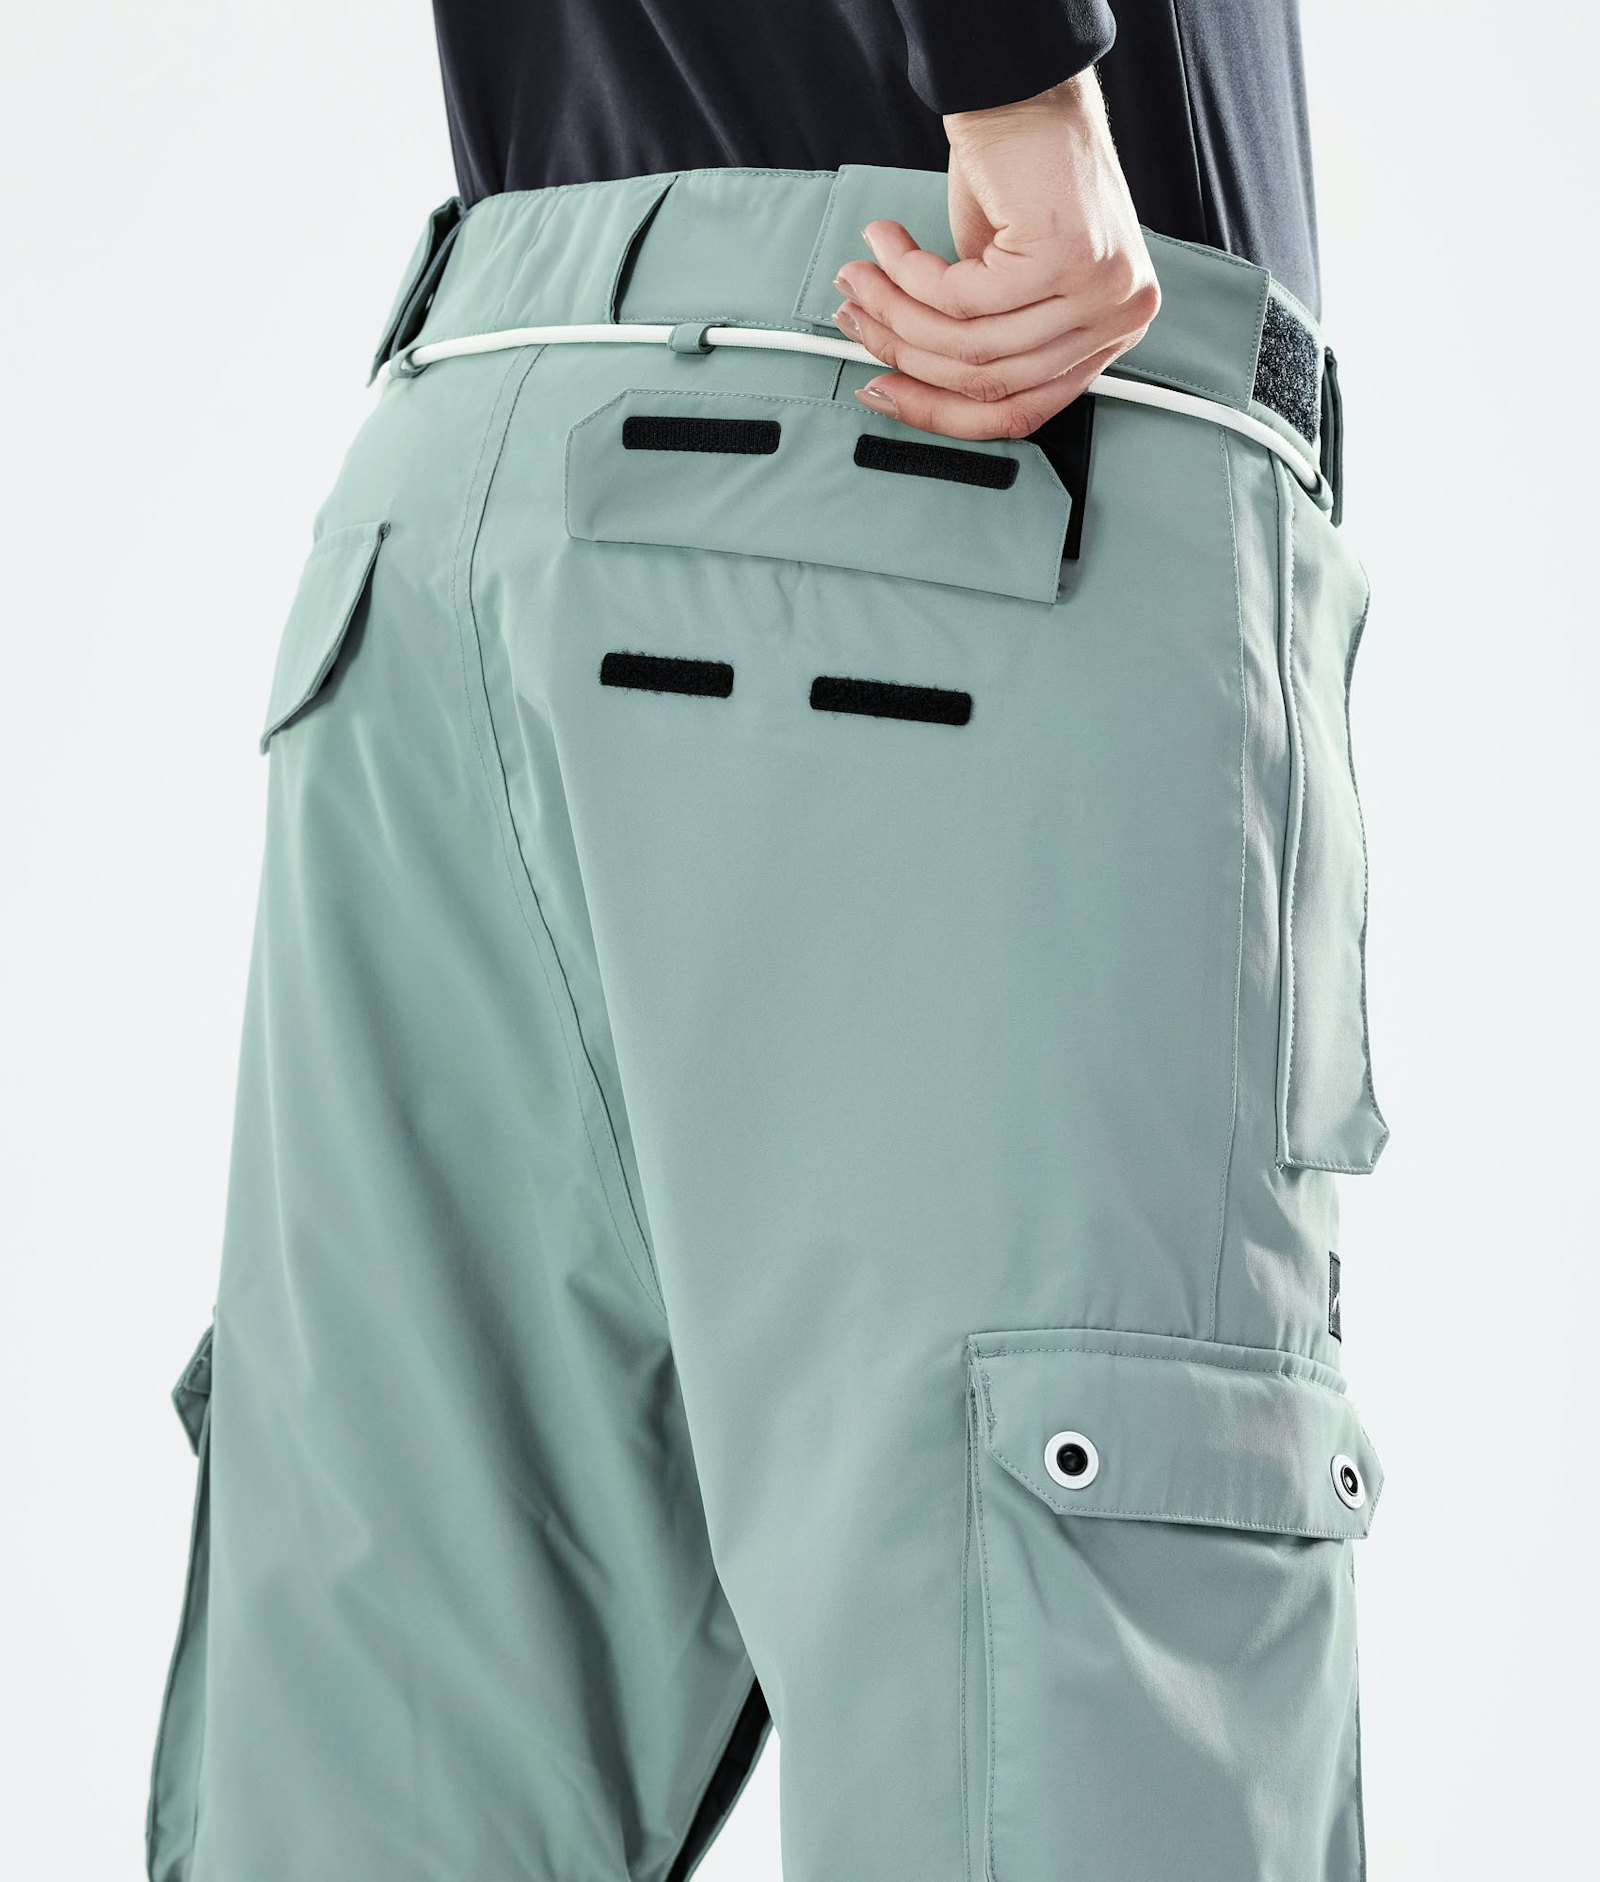 Iconic W 2021 Pantalon de Snowboard Femme Faded Green, Image 6 sur 6